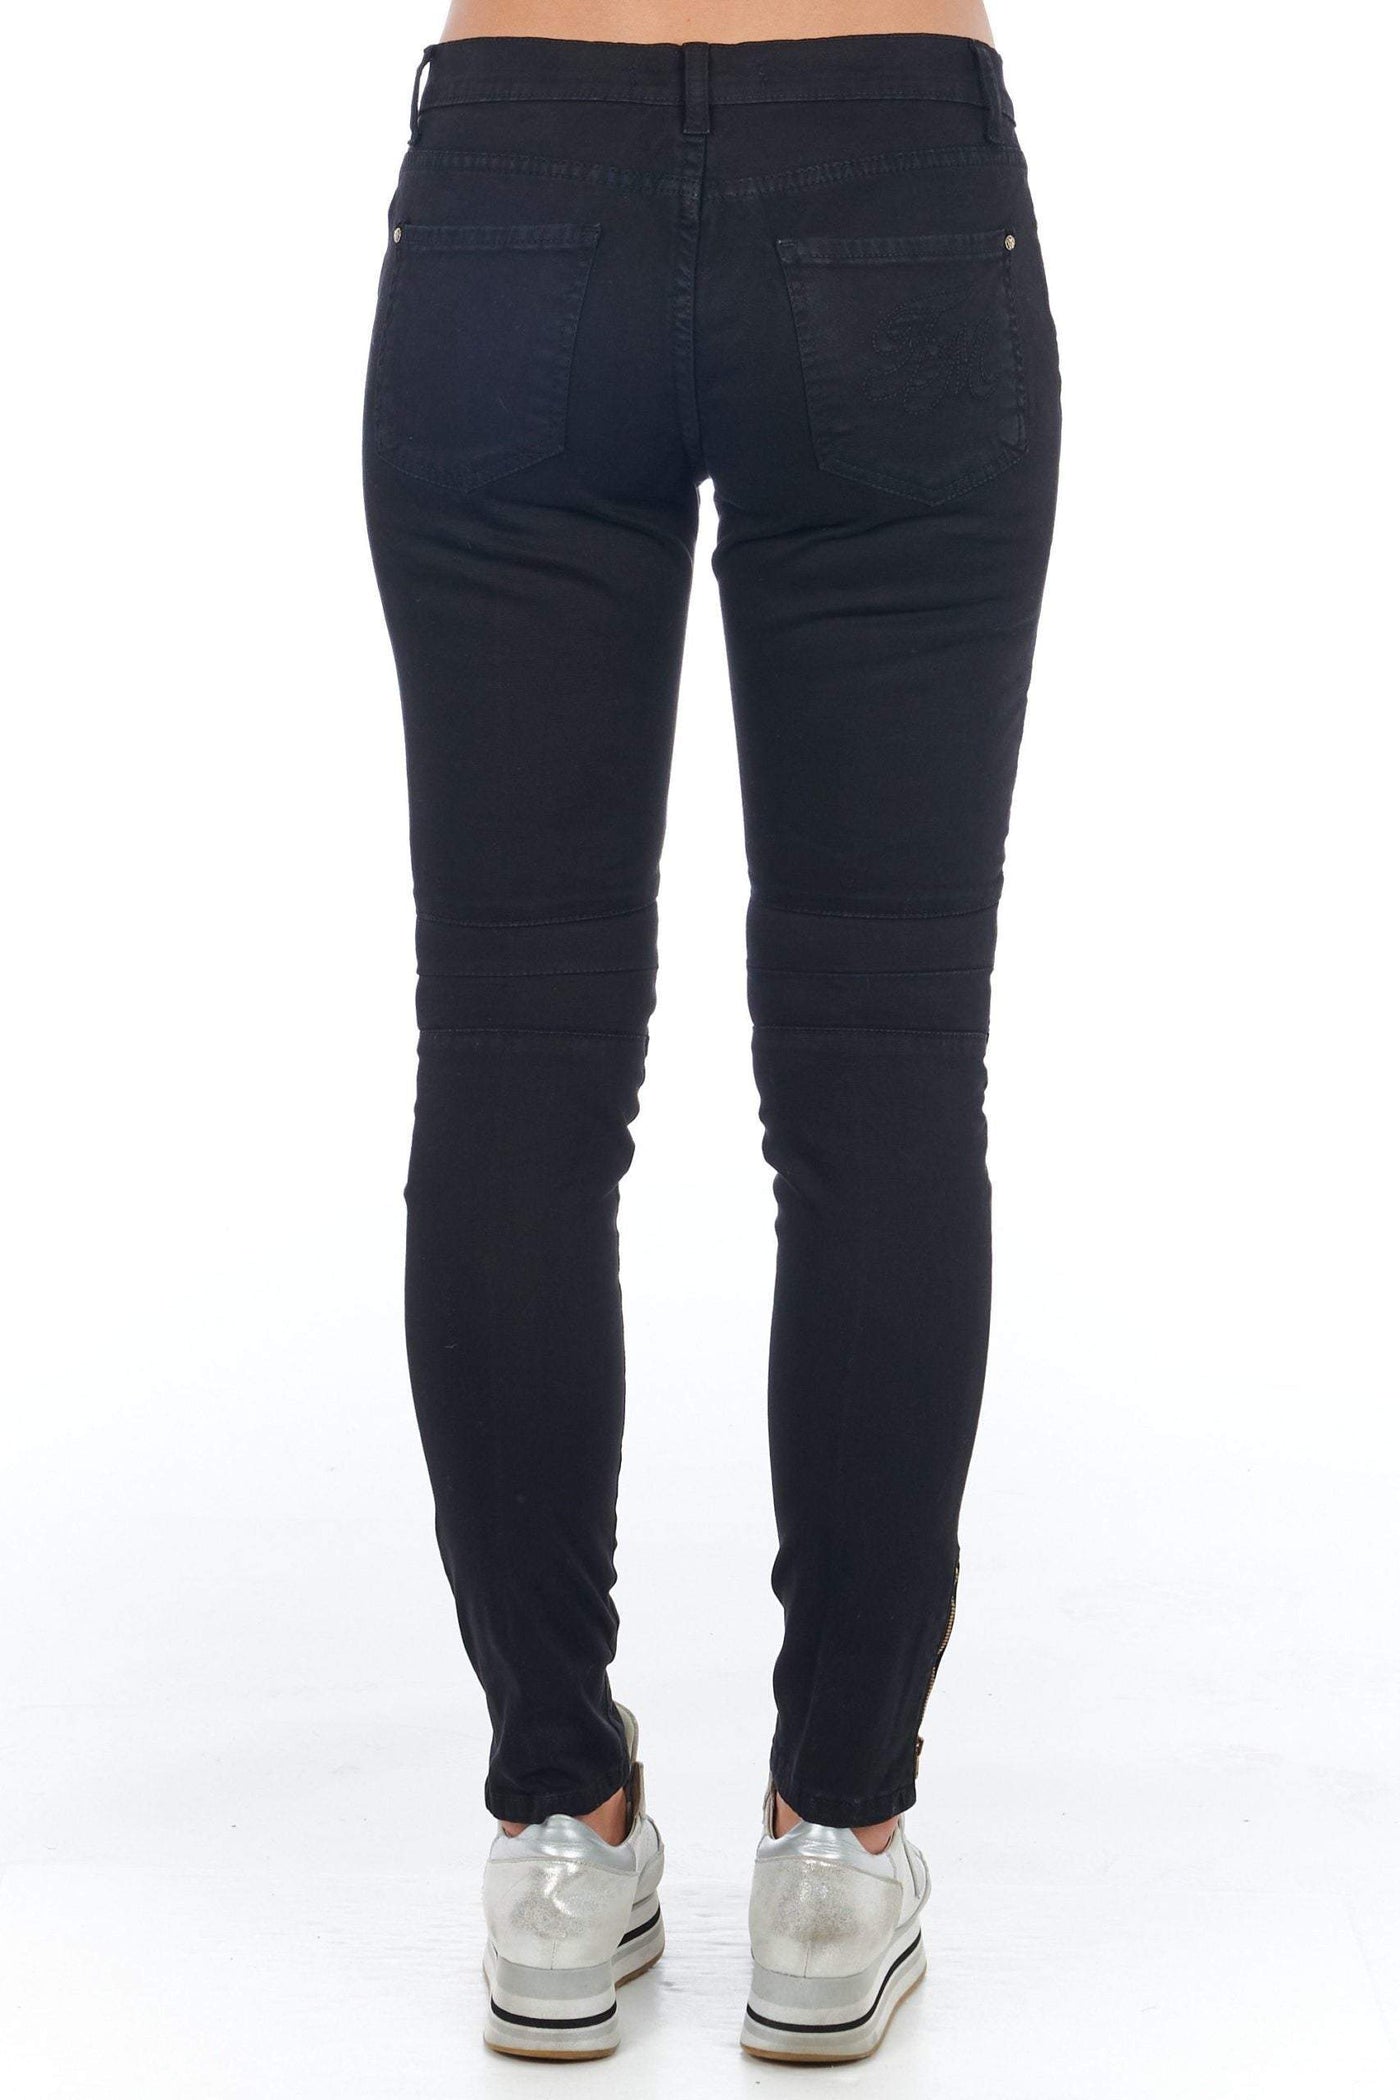 Frankie Morello Black Cotton Jeans & Pant Black, feed-1, Frankie Morello, IT40 | XS, IT42 | S, IT44 | M, IT46 | L, Jeans & Pants - Women - Clothing at SEYMAYKA